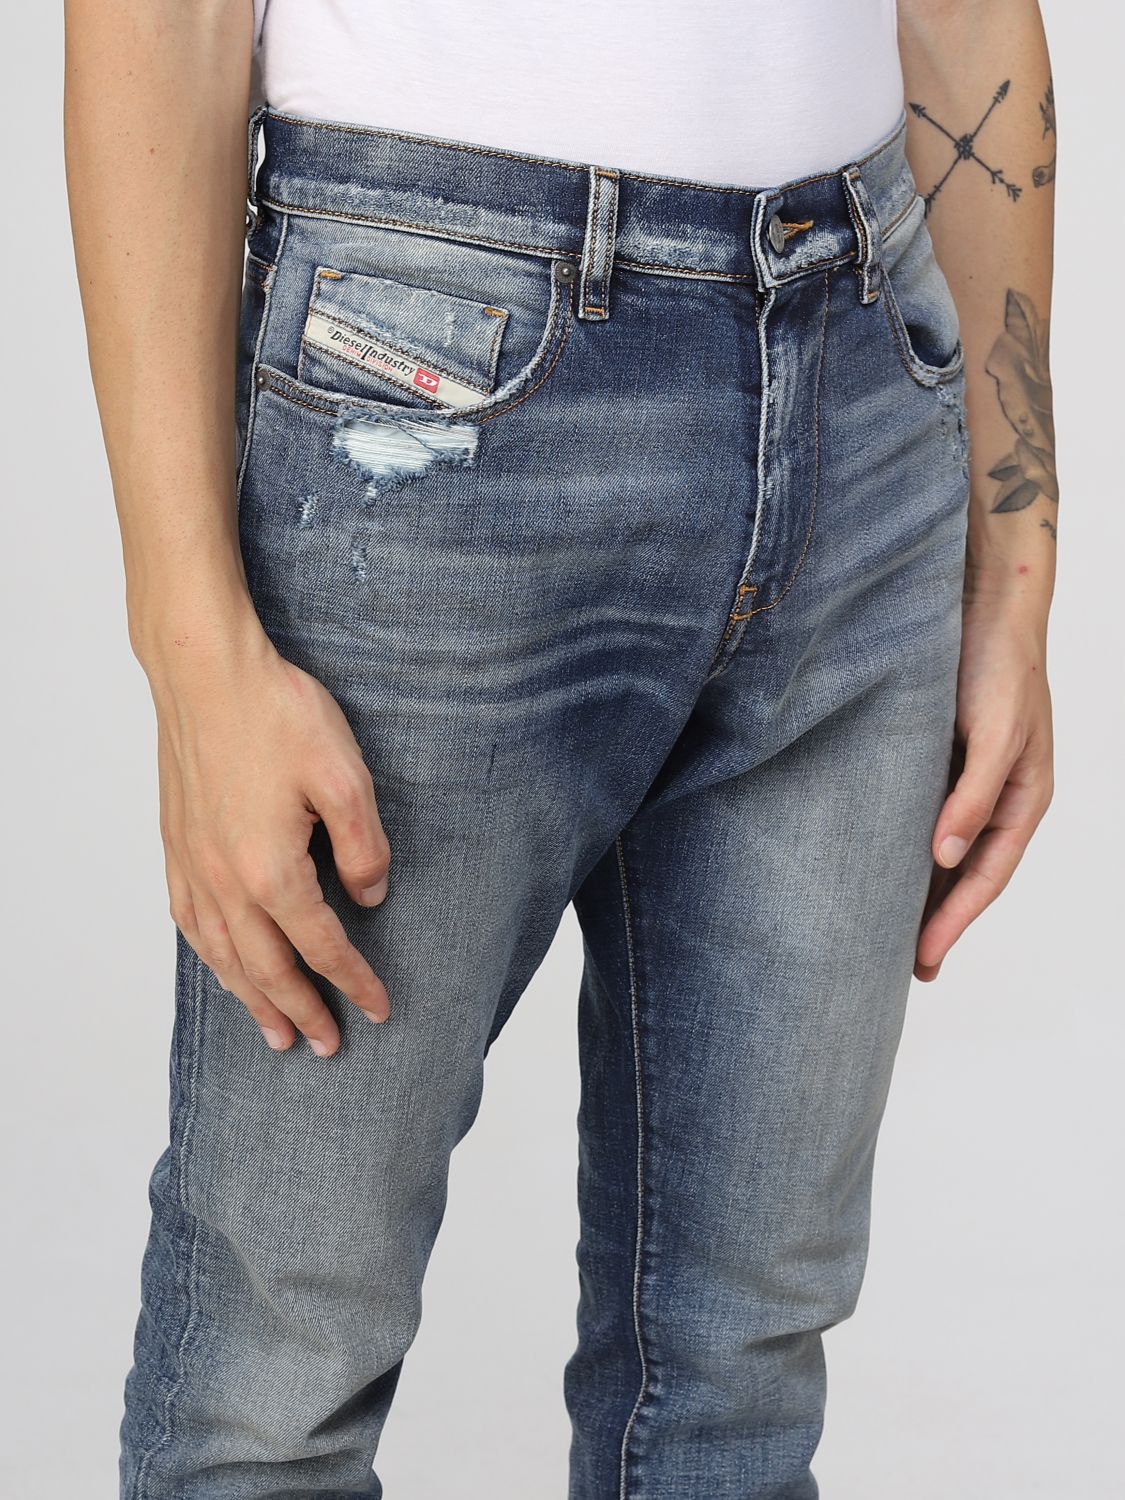 geluid draai Manuscript Diesel Outlet: jeans for man - Denim | Diesel jeans A0356209E15 online on  GIGLIO.COM